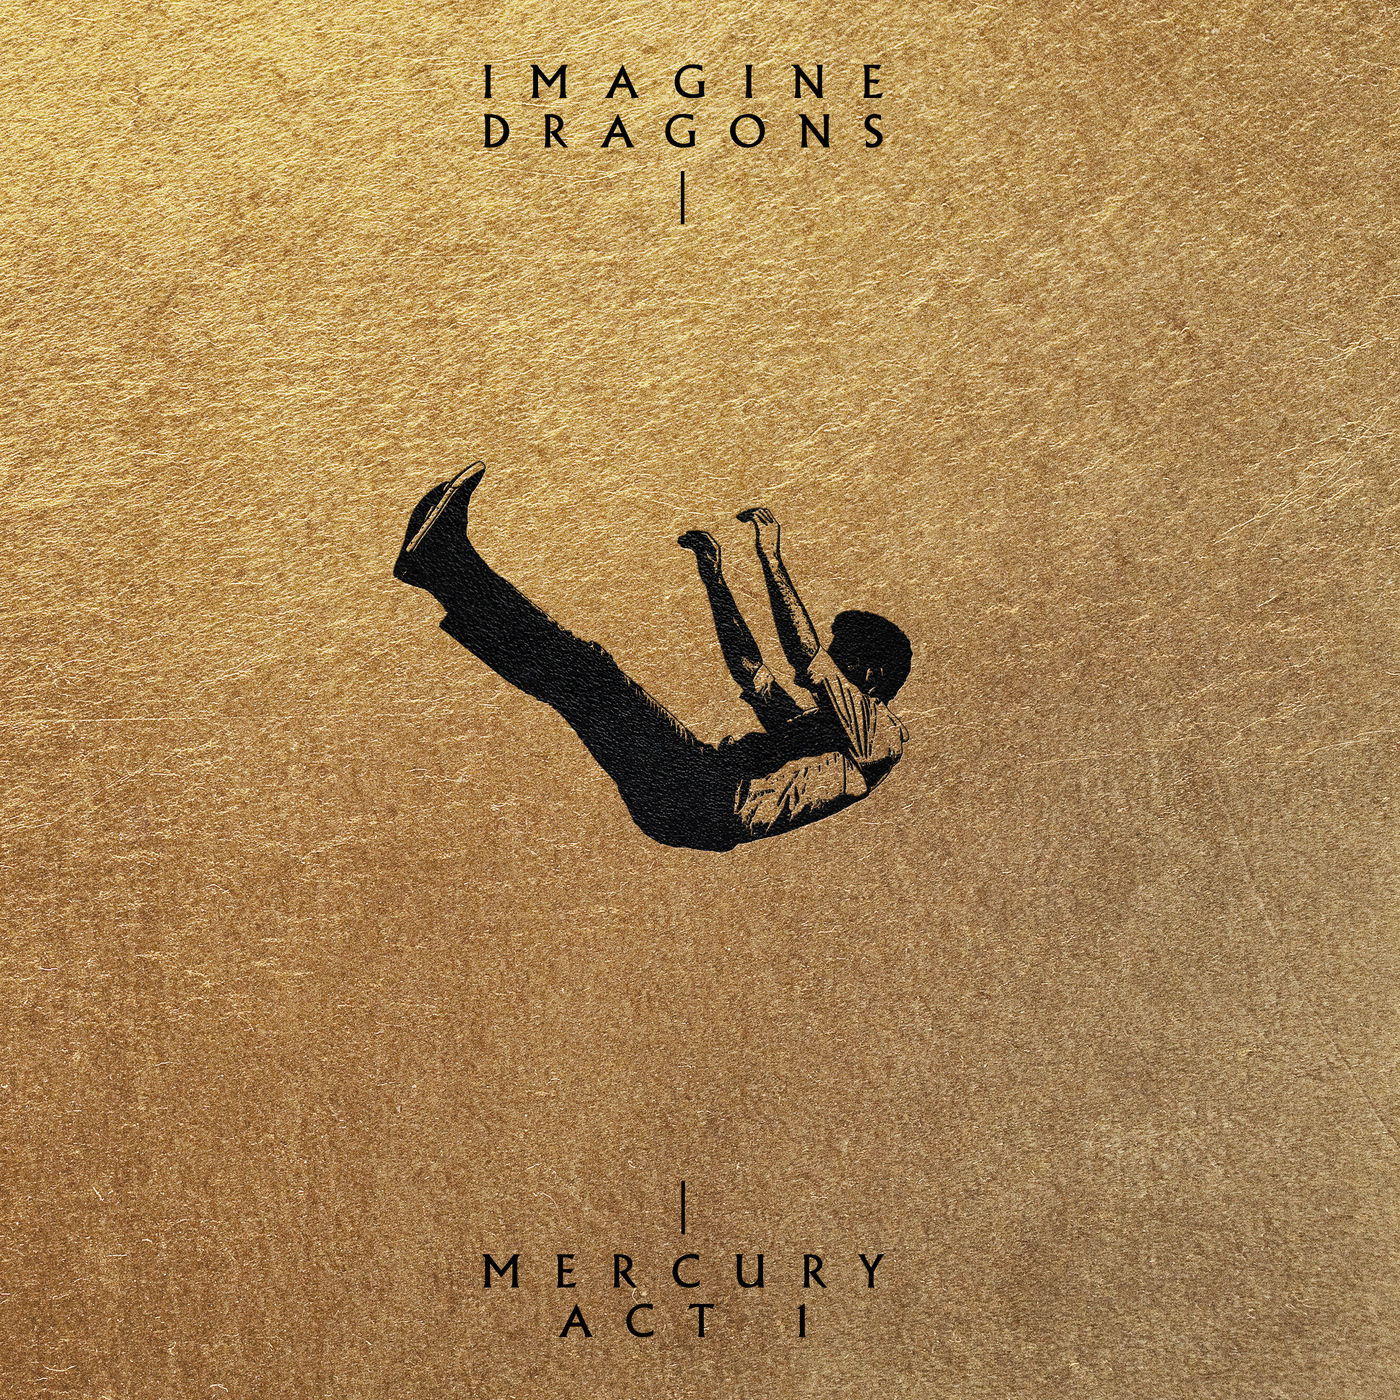 Imagine Dragons - 2021 - Mercury - Act 1 (24-44.1)